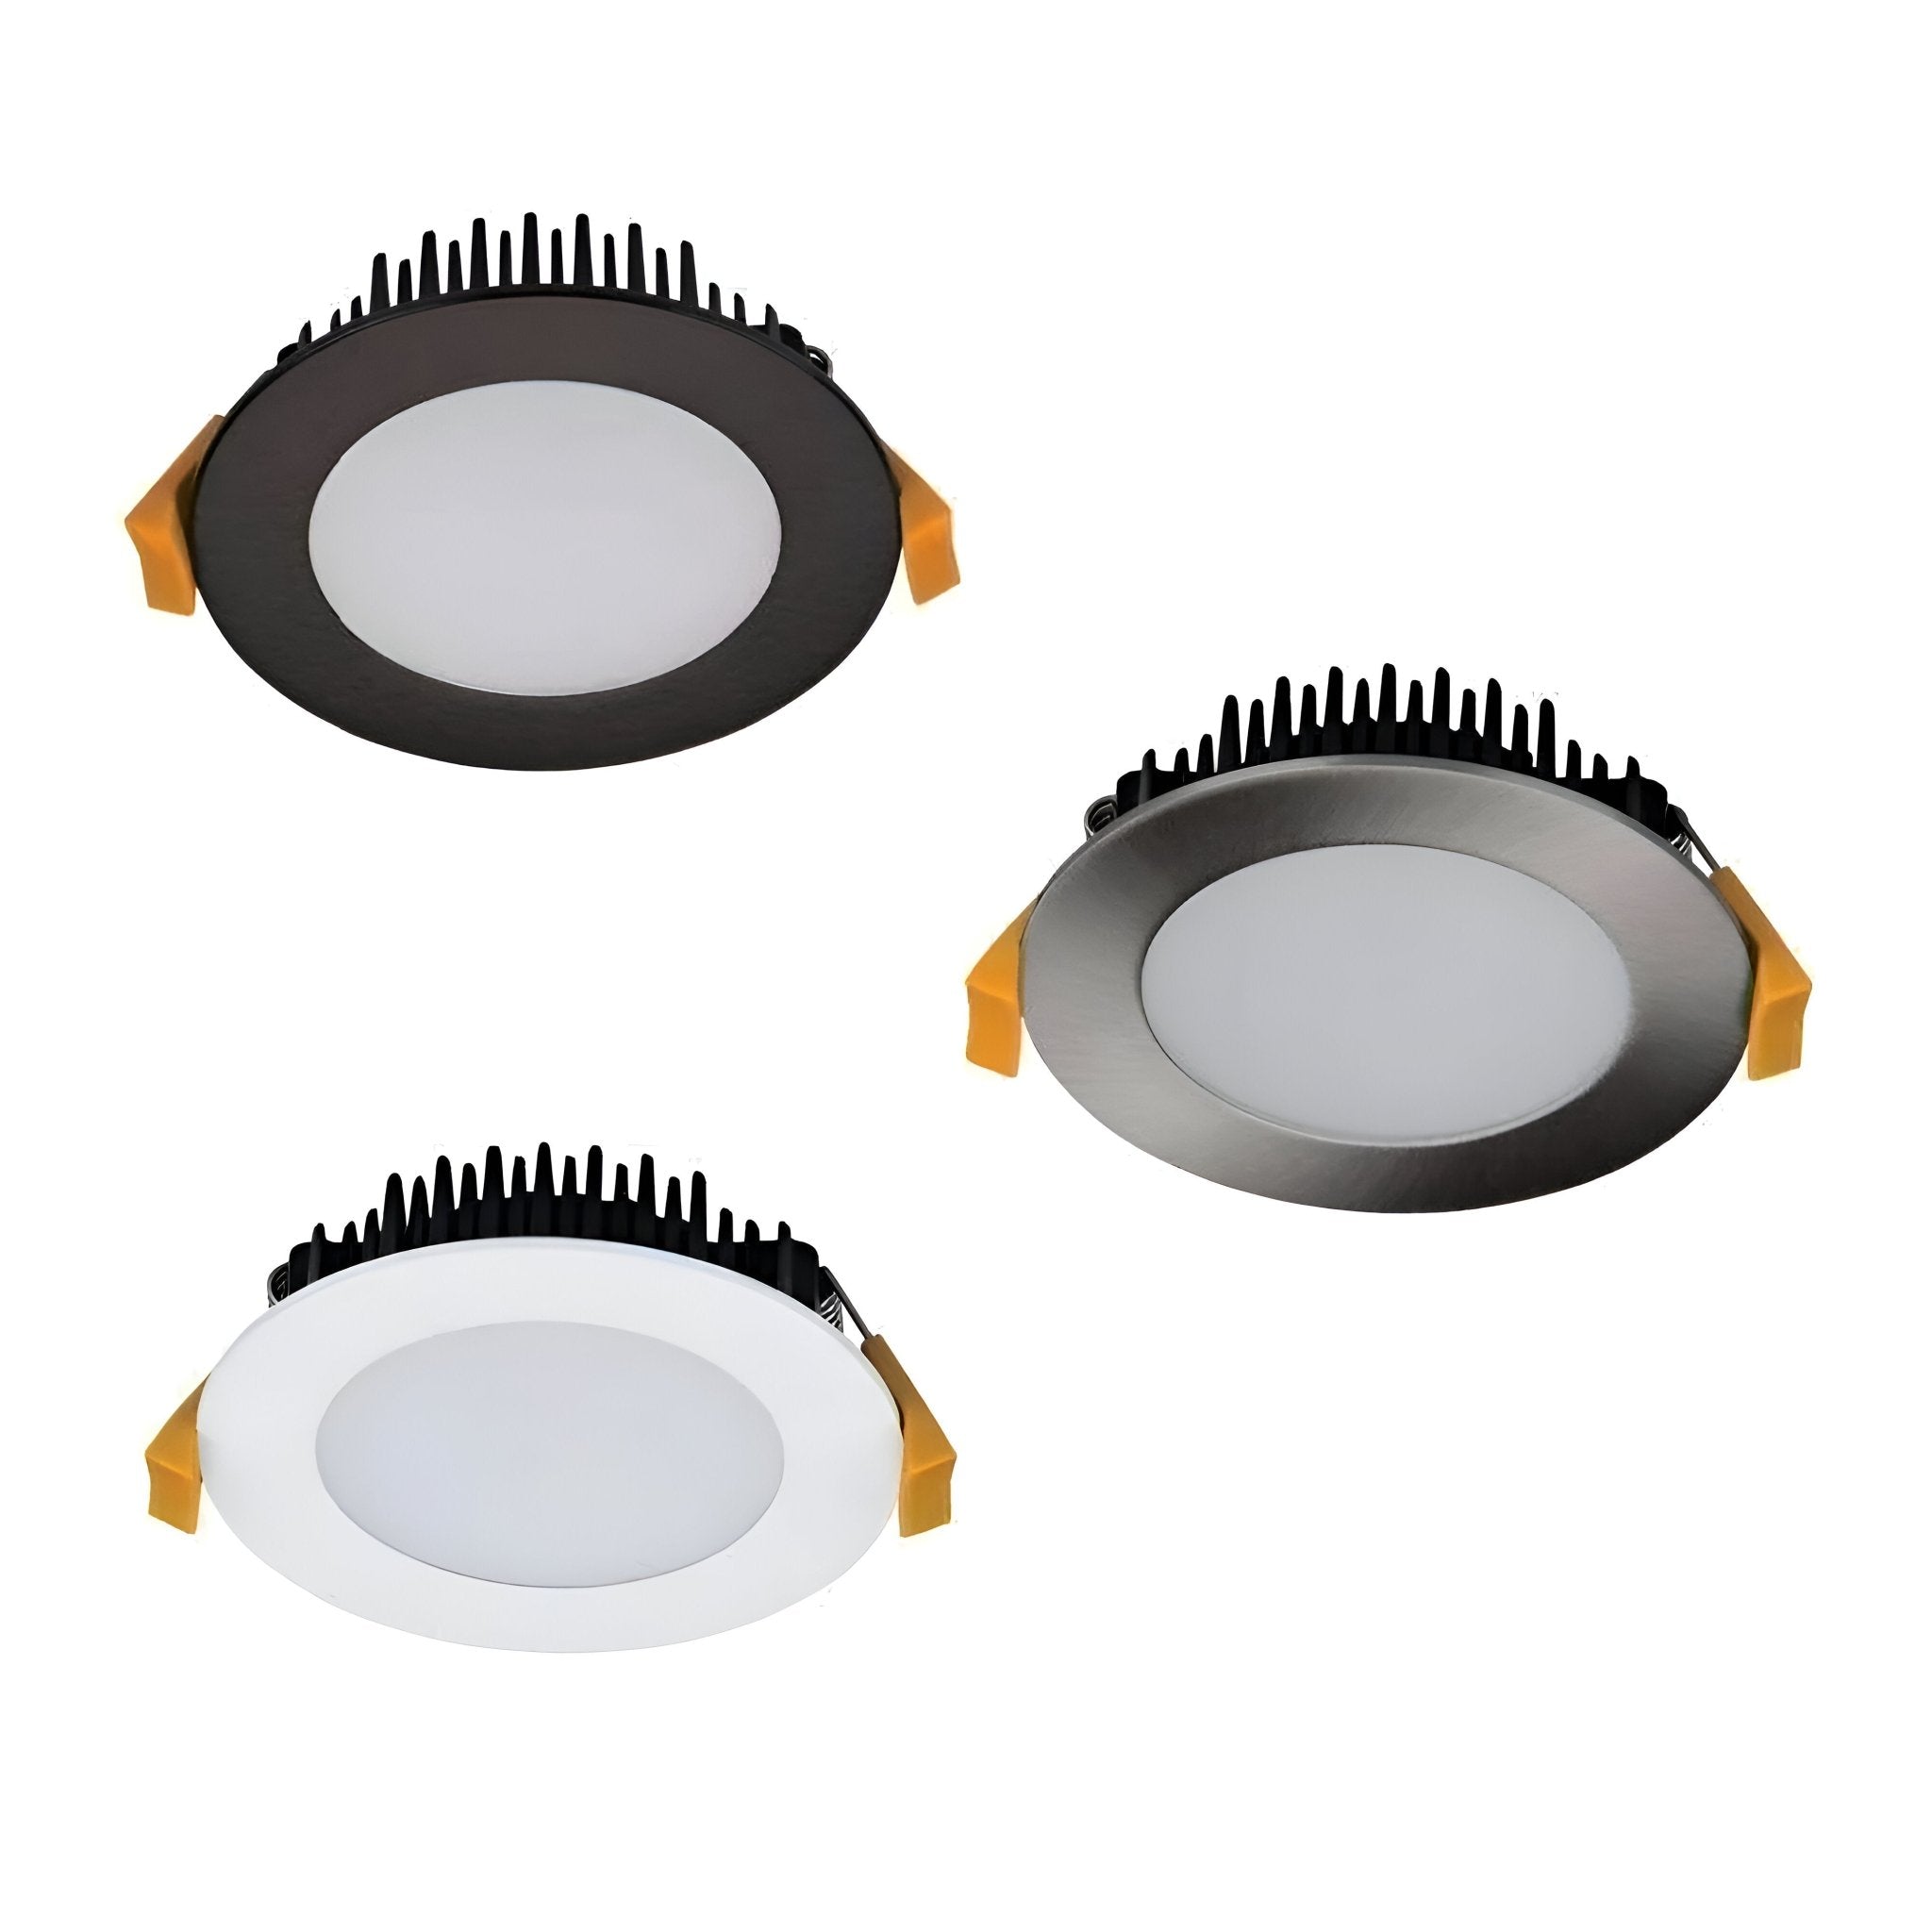 Domus TEK-13 TRIO/DALI 13W Dimmable LED Tricolour IP44 Downlight - Black/White/Satin Chrome - Mases LightingDomus